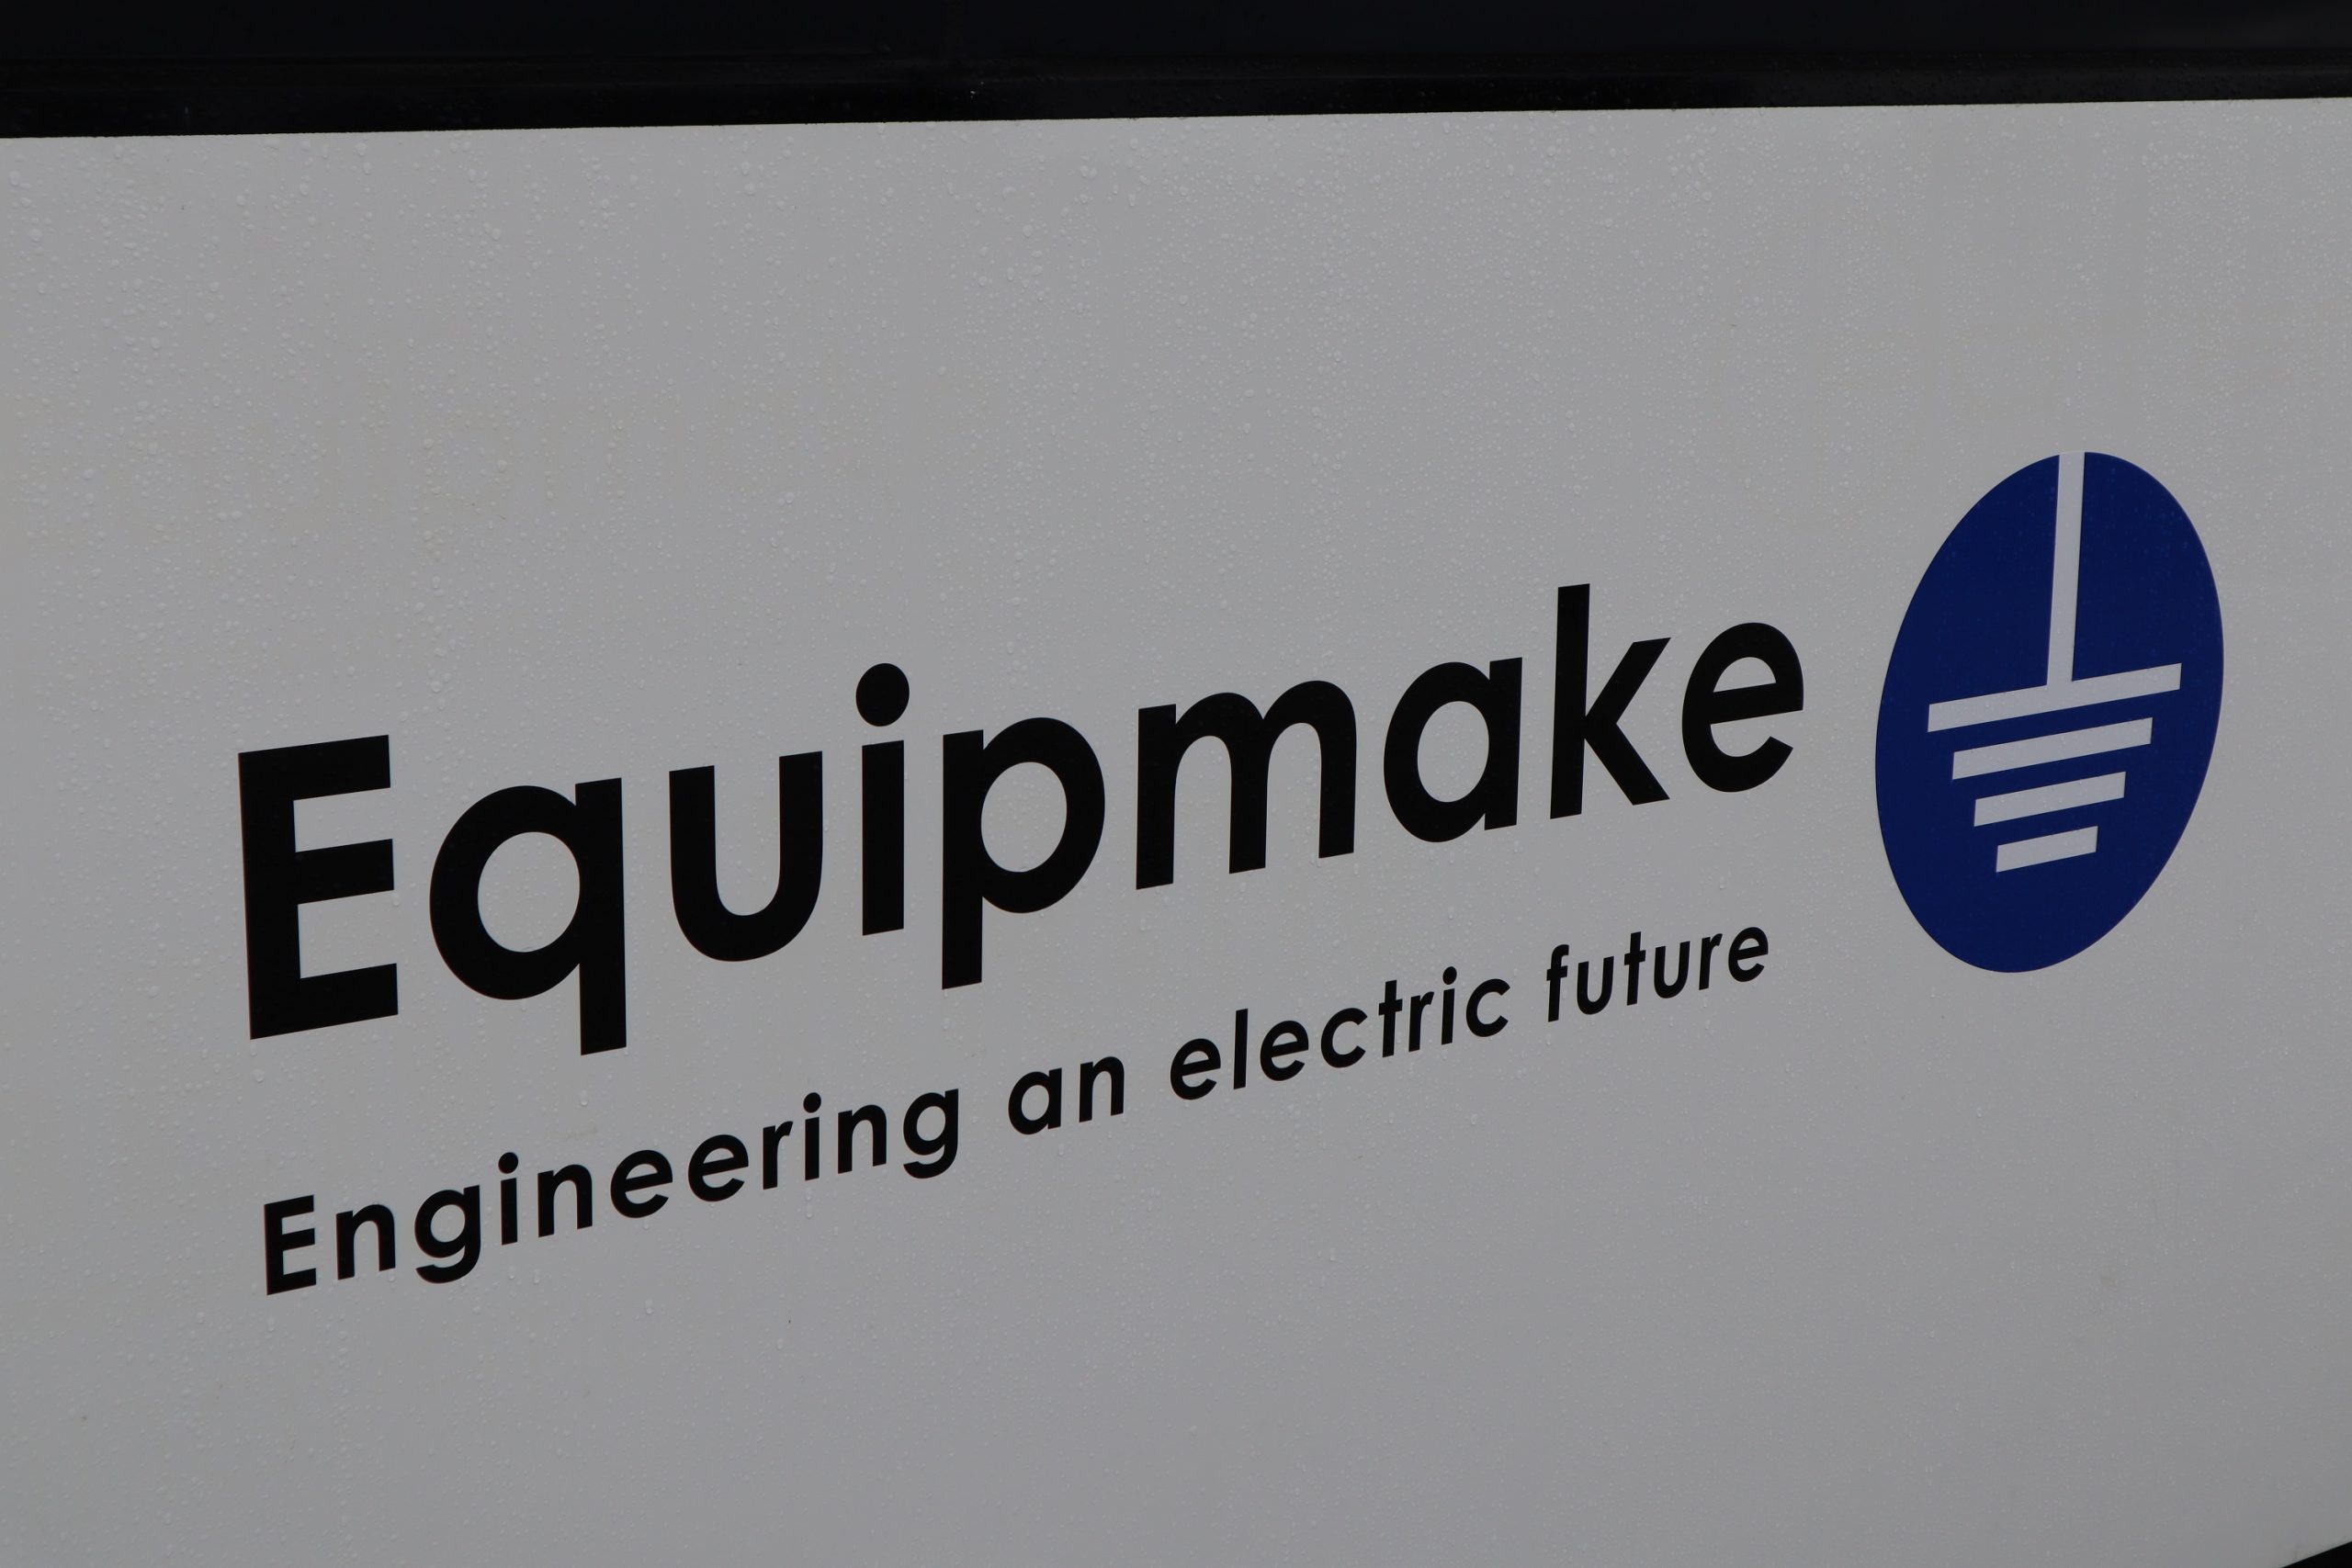 Equipmake grant allows work in hydrogen driveline partnership